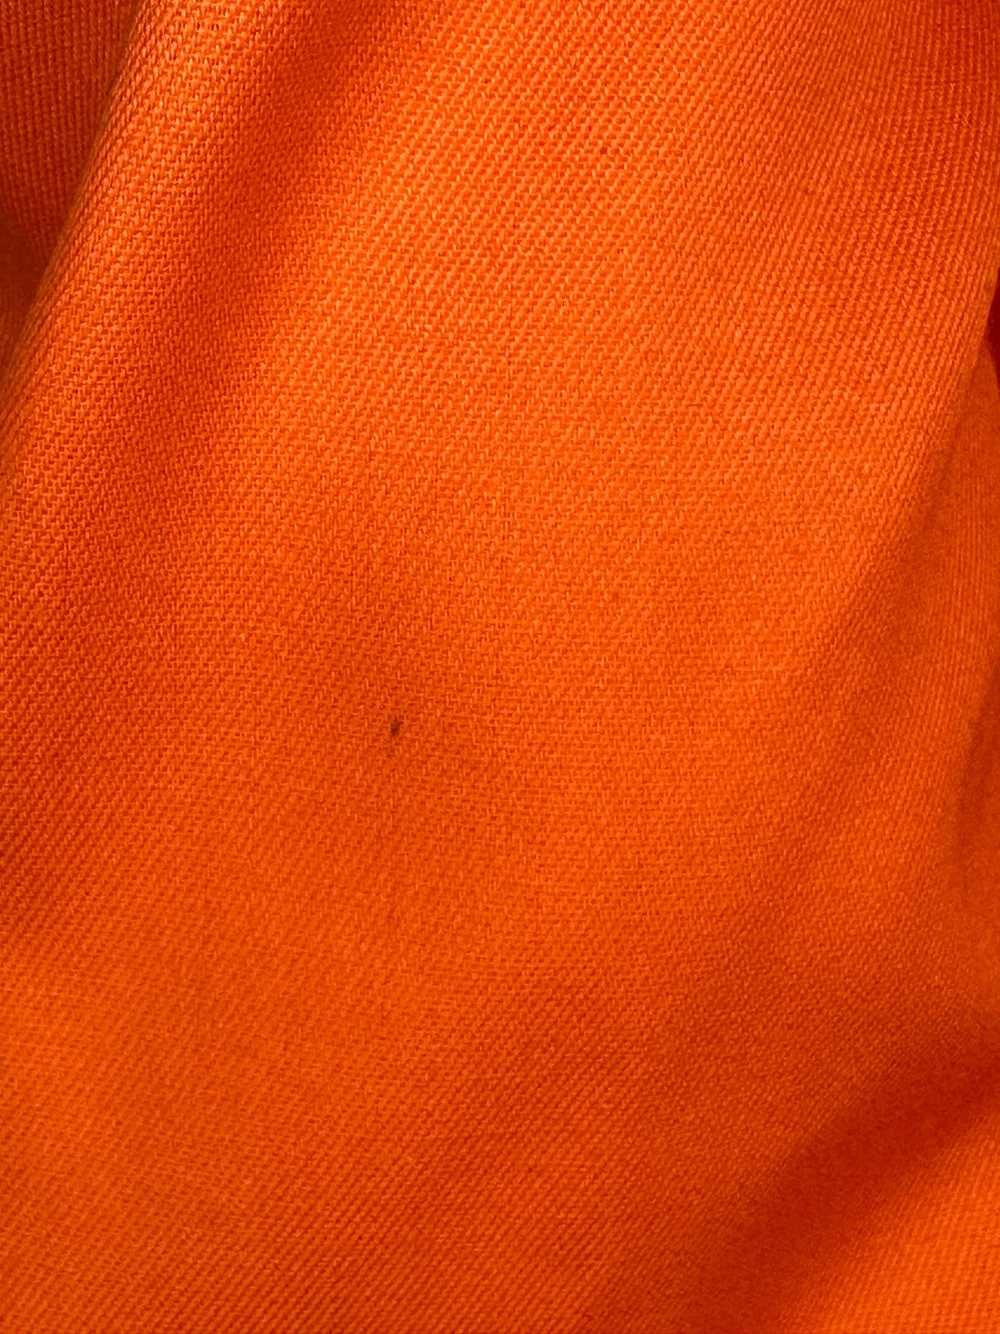 1970s Orange Mod Jacket with Zippers, Harvé Benar… - image 7